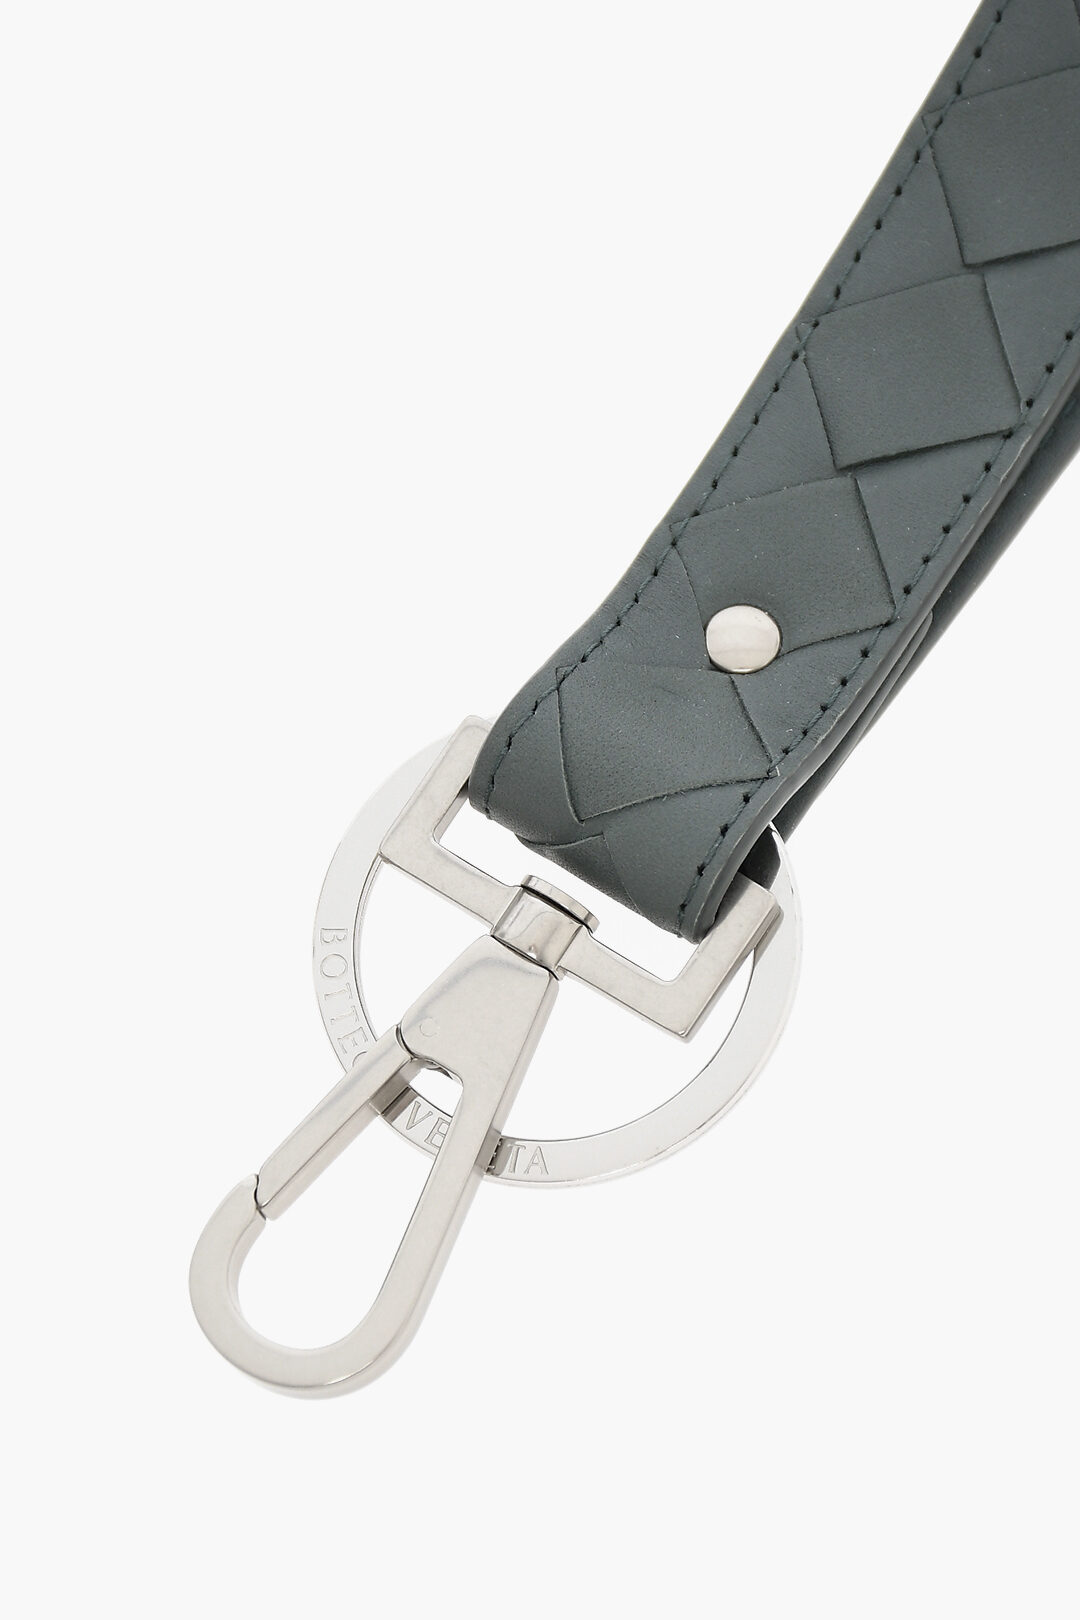 Bottega Veneta® Women's Intreccio Key Ring in Taupe Grey. Shop online now.